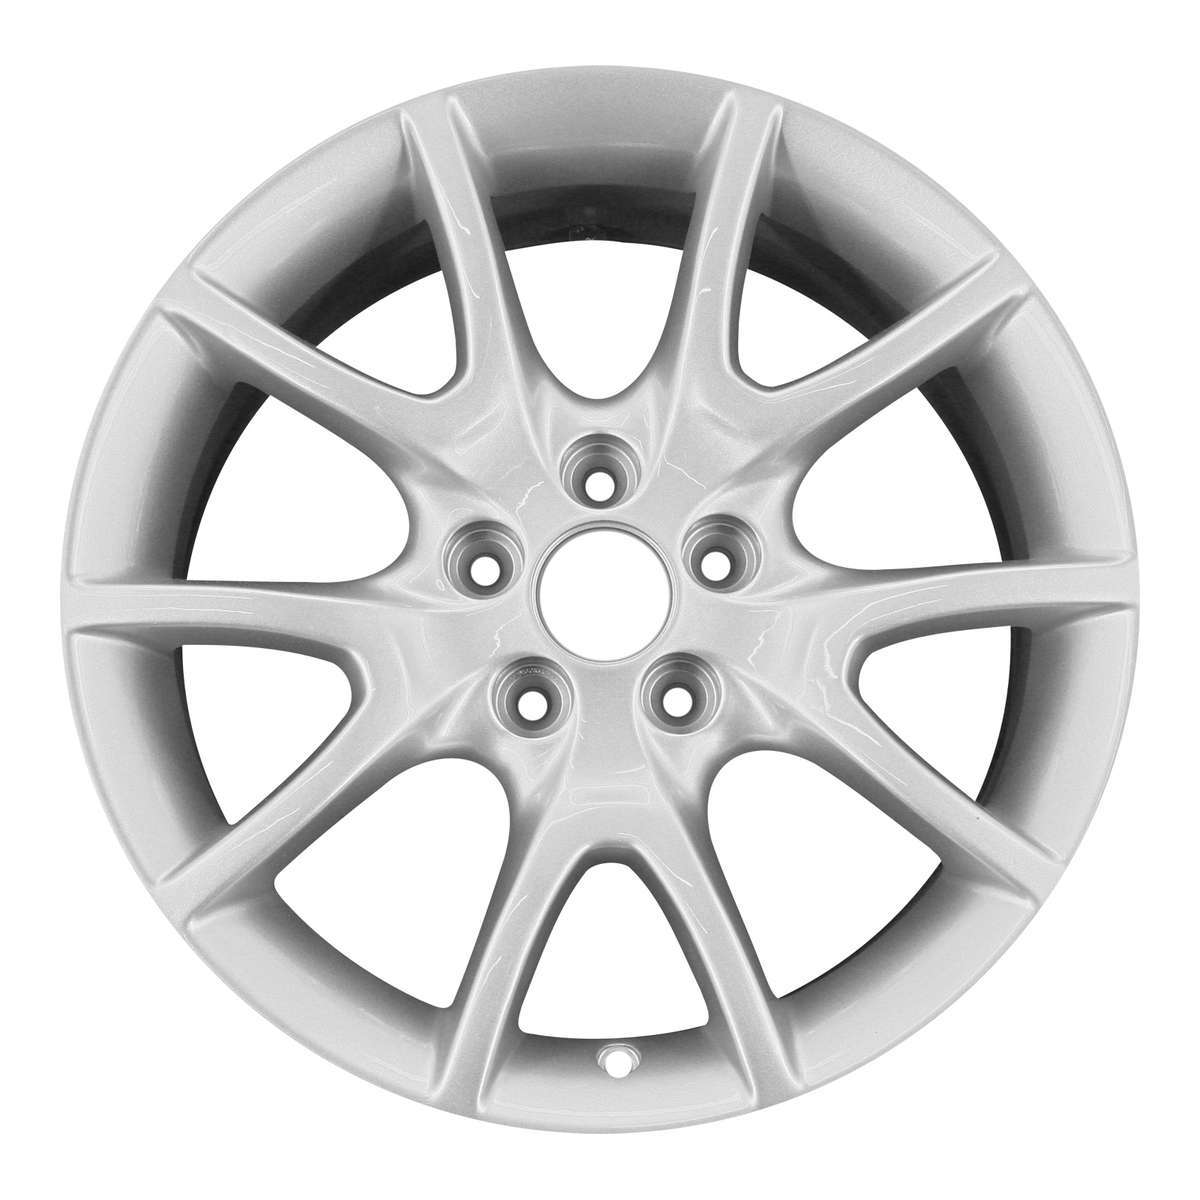 2015 Dodge Dart 17" OEM Wheel Rim W2445S